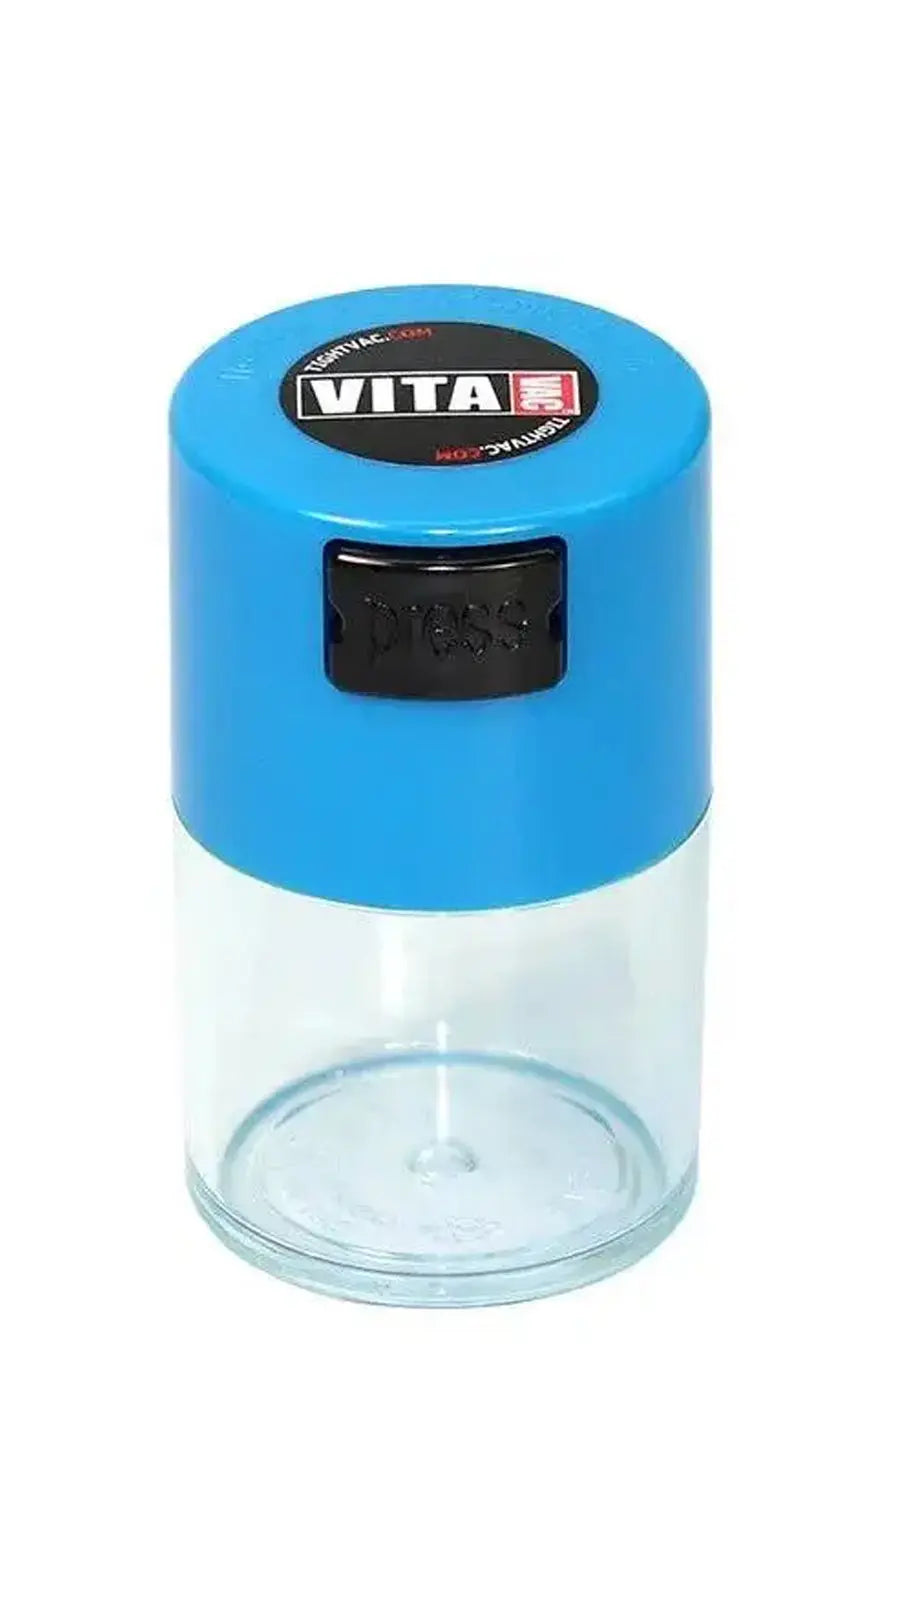 Vitavac 0,06 liter Pocket / 20g / Clear / Light Blue TightVac Europe